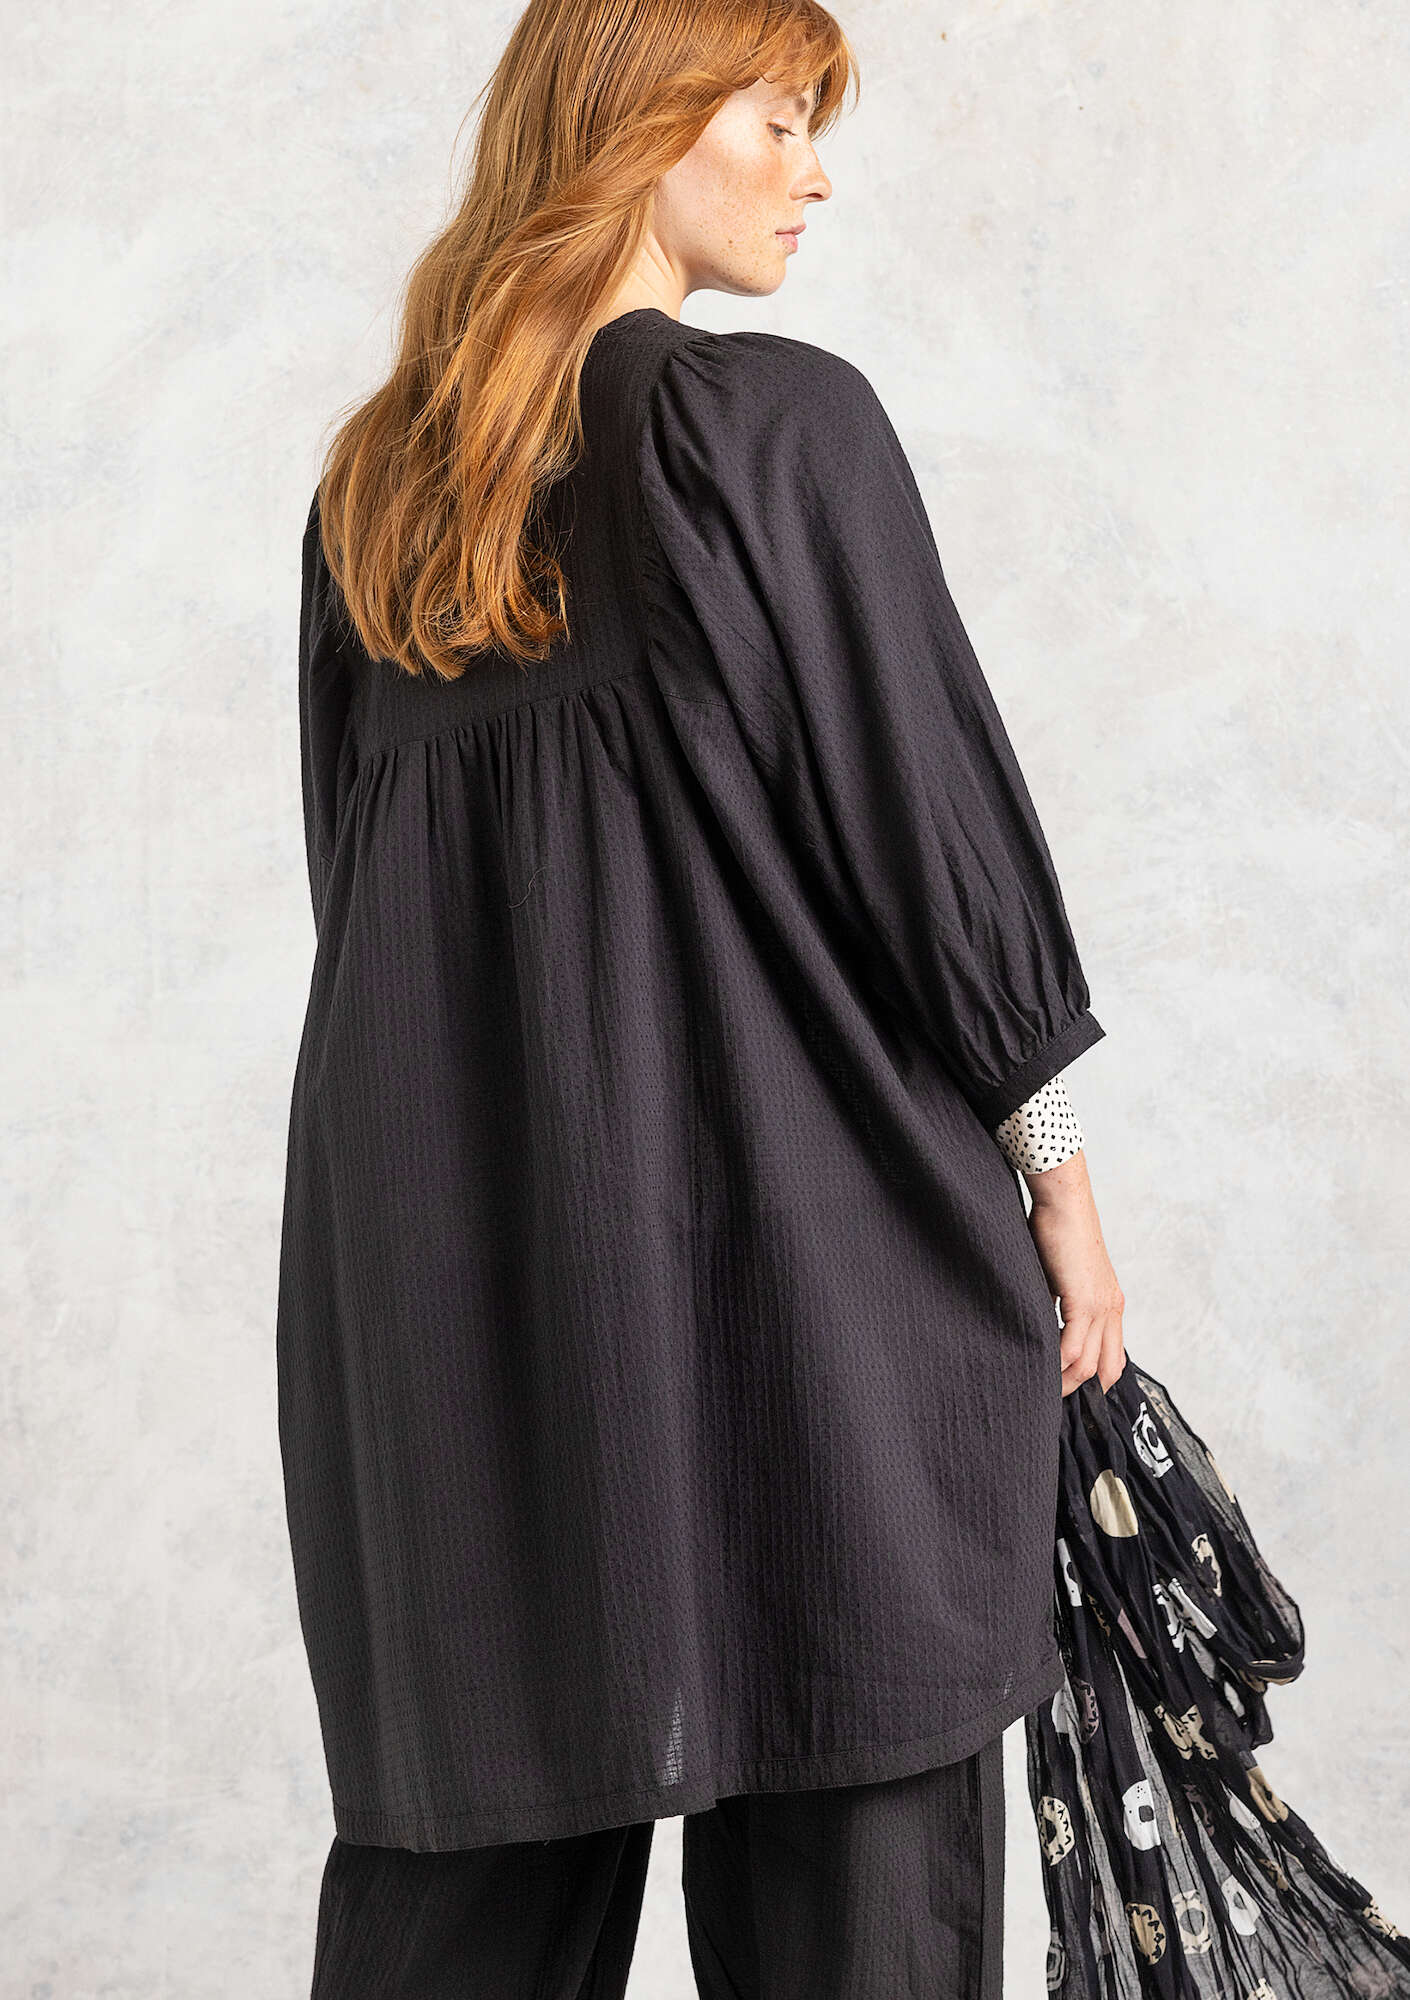 “Hilda” woven dress in organic cotton black